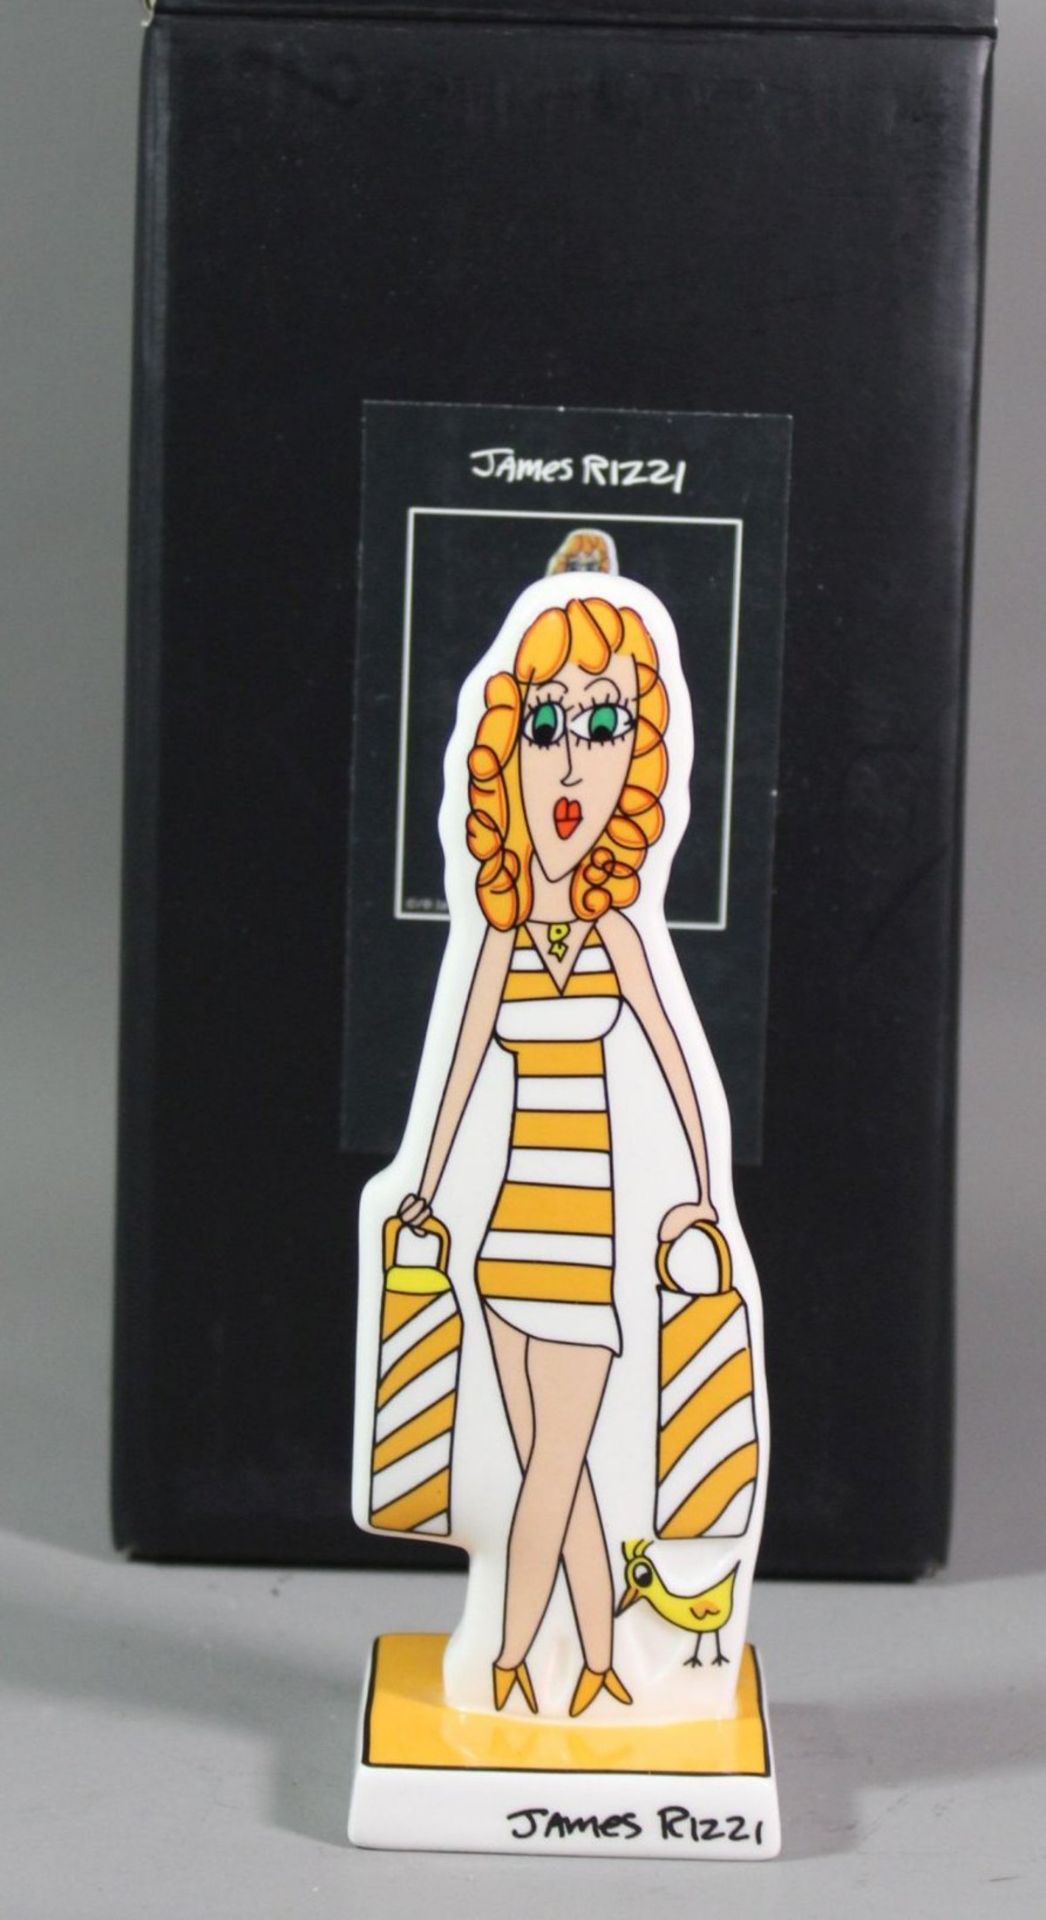 Goebel-Figur "Shopping Girl", Artis Orbis, Entw. James Rizzi, orig. Karton, ca. H-13,5cm.